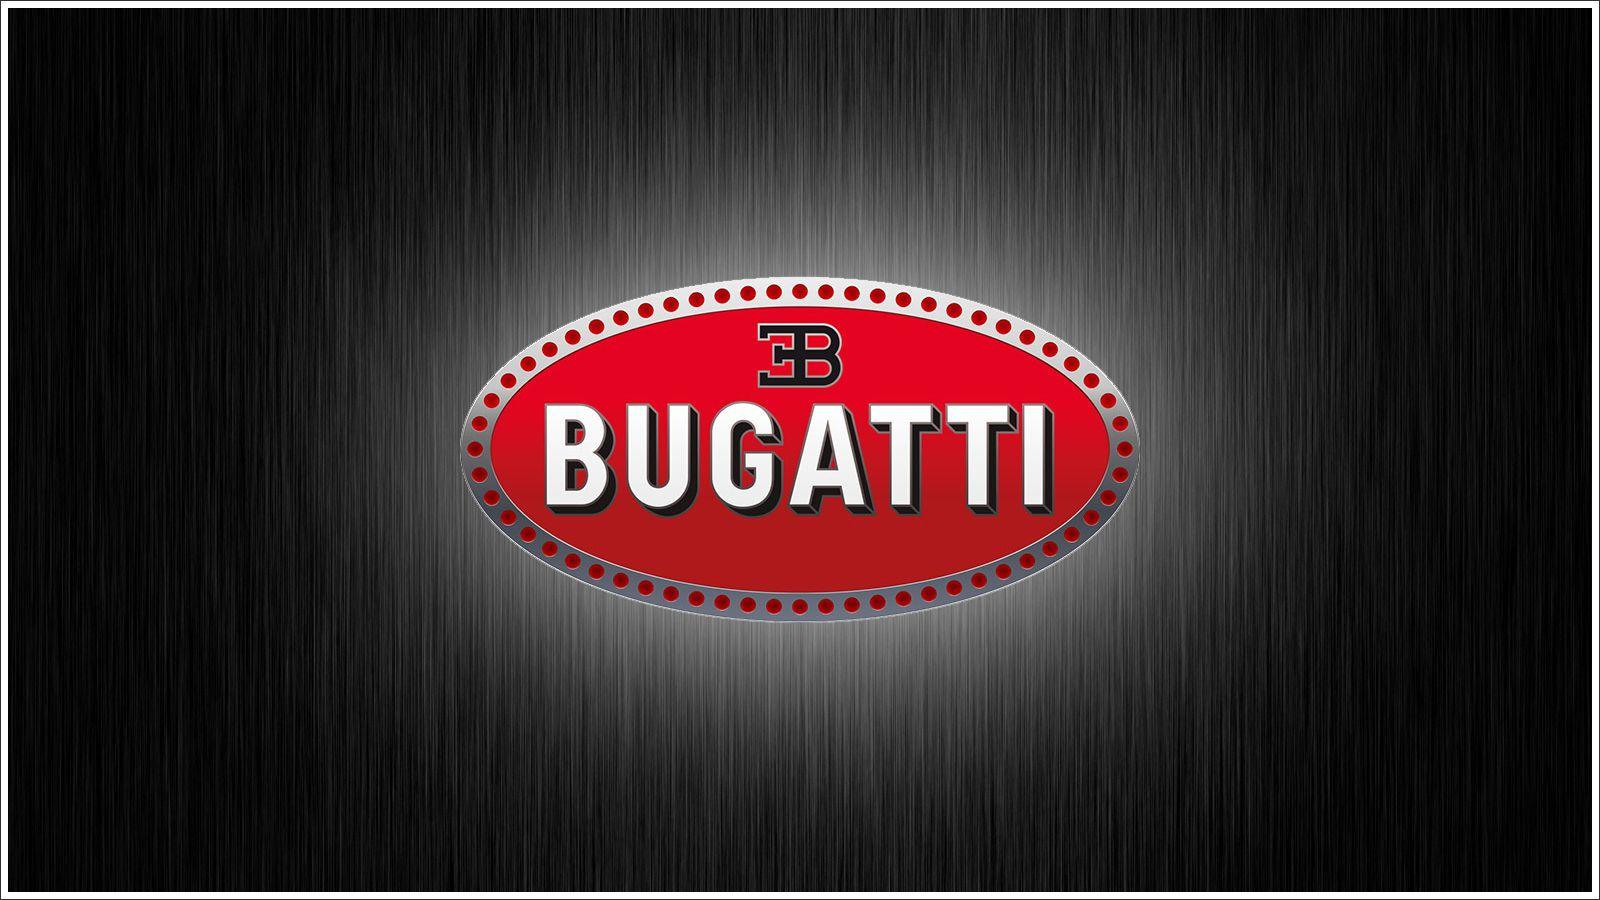 Buggati Logo - Bugatti Logo Meaning and History. Symbol Bugatti | World Cars Brands